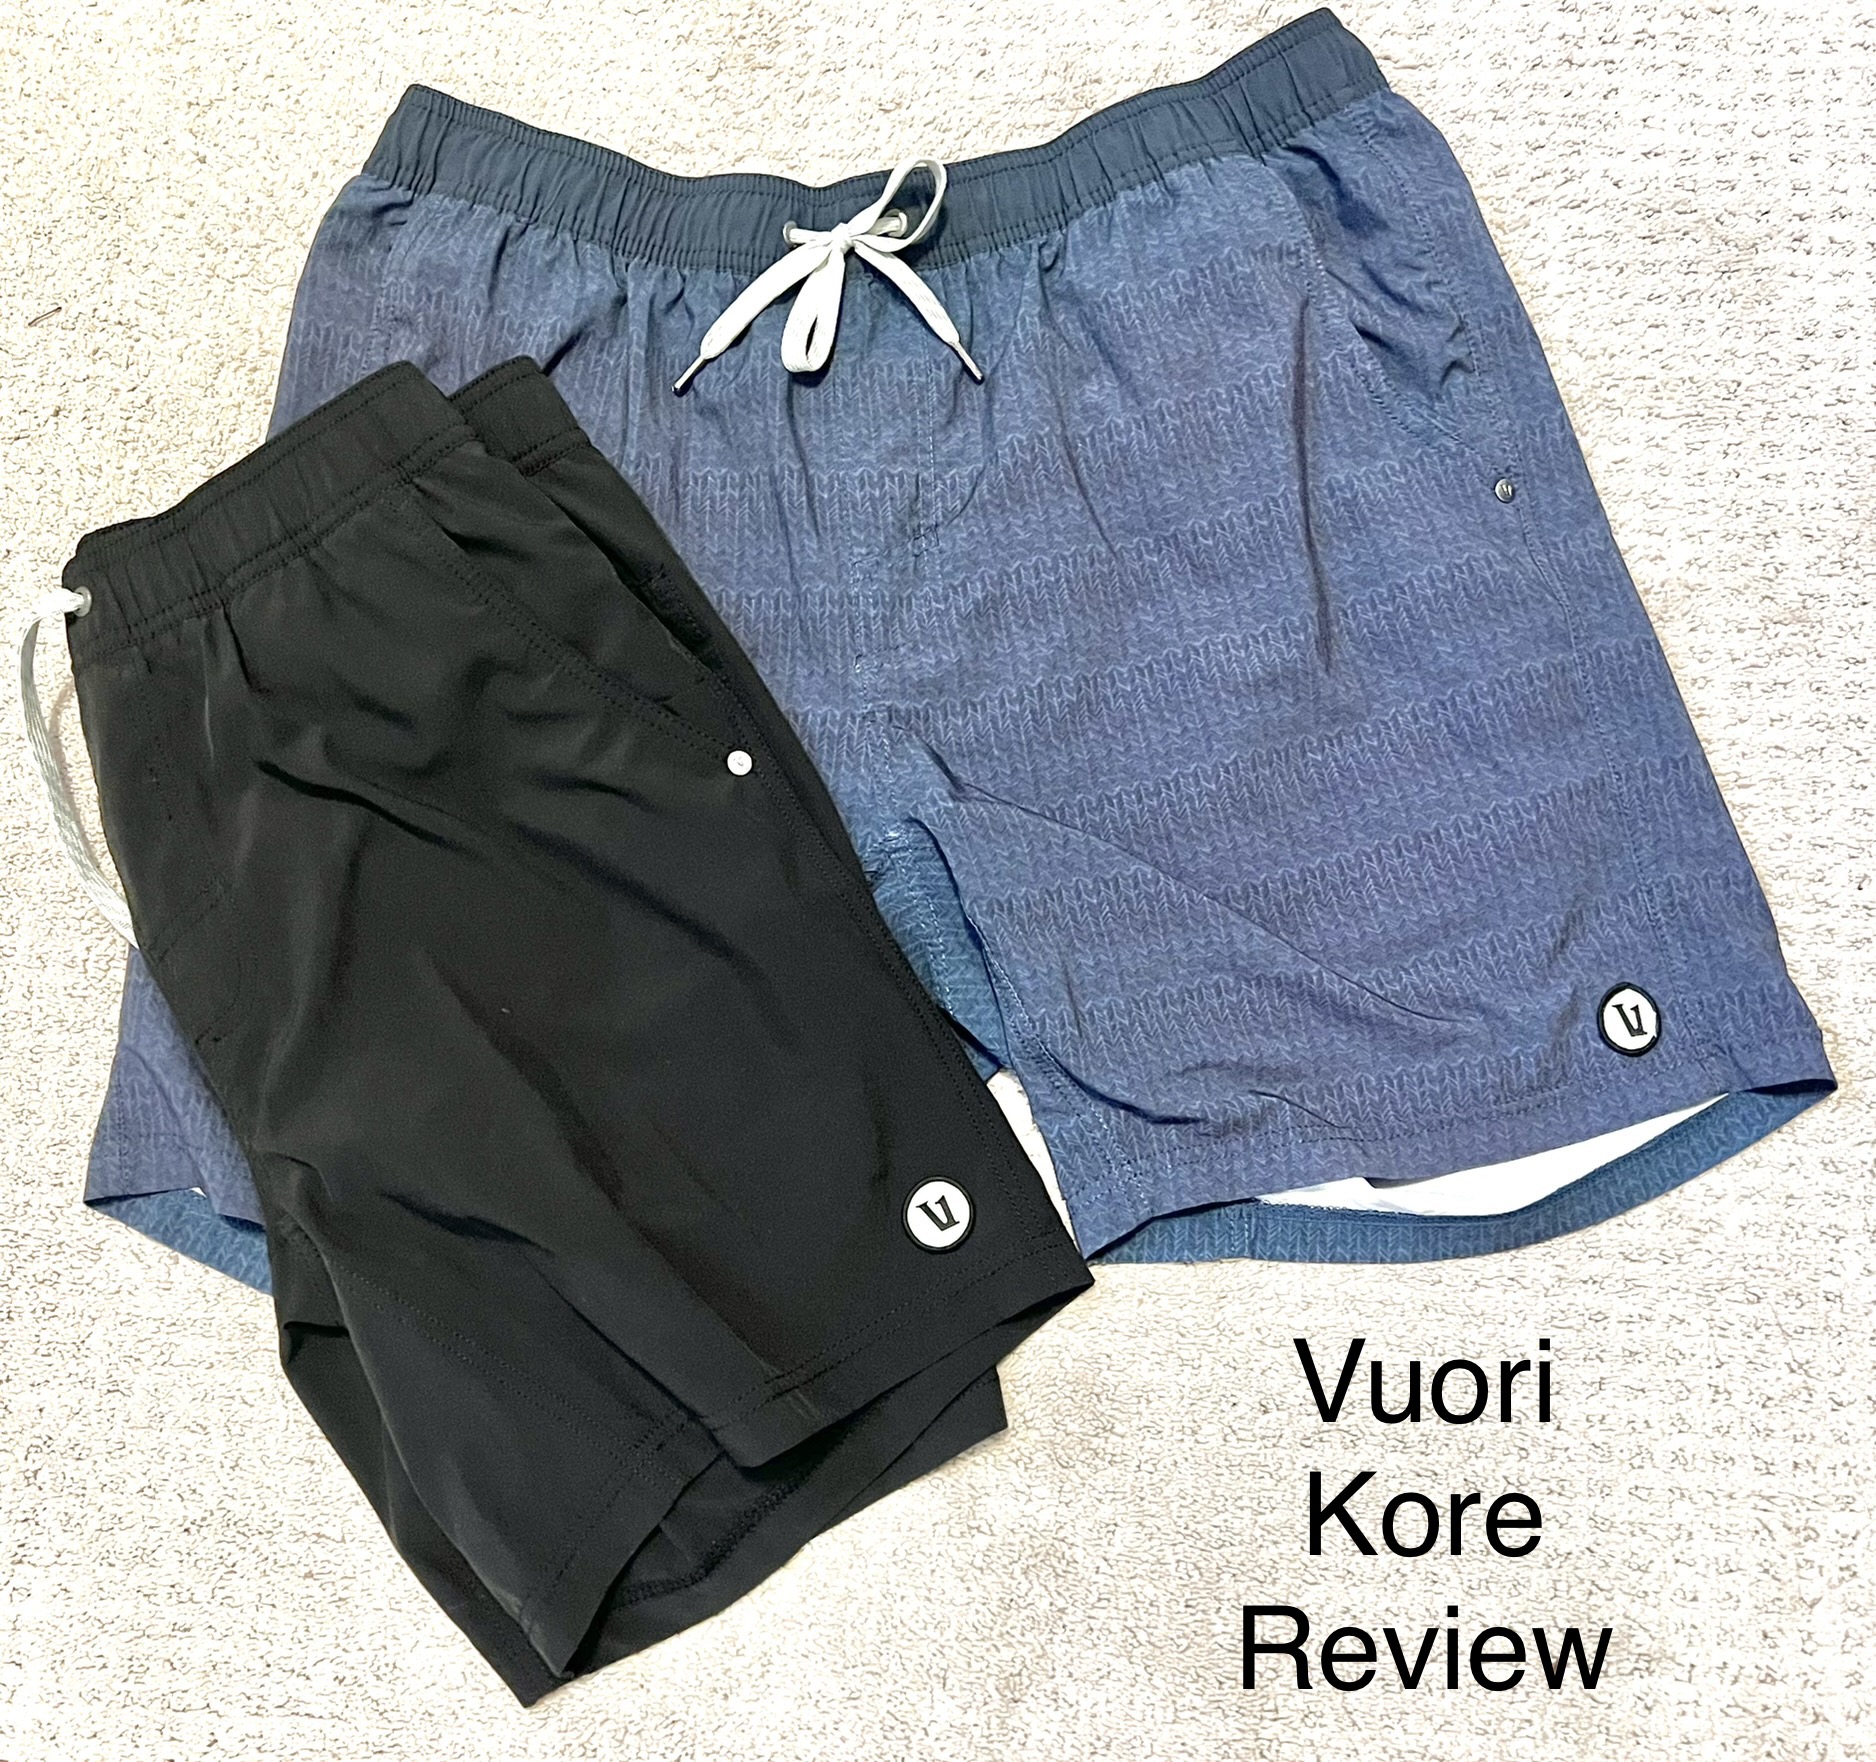 Vuori kore shorts in two colors